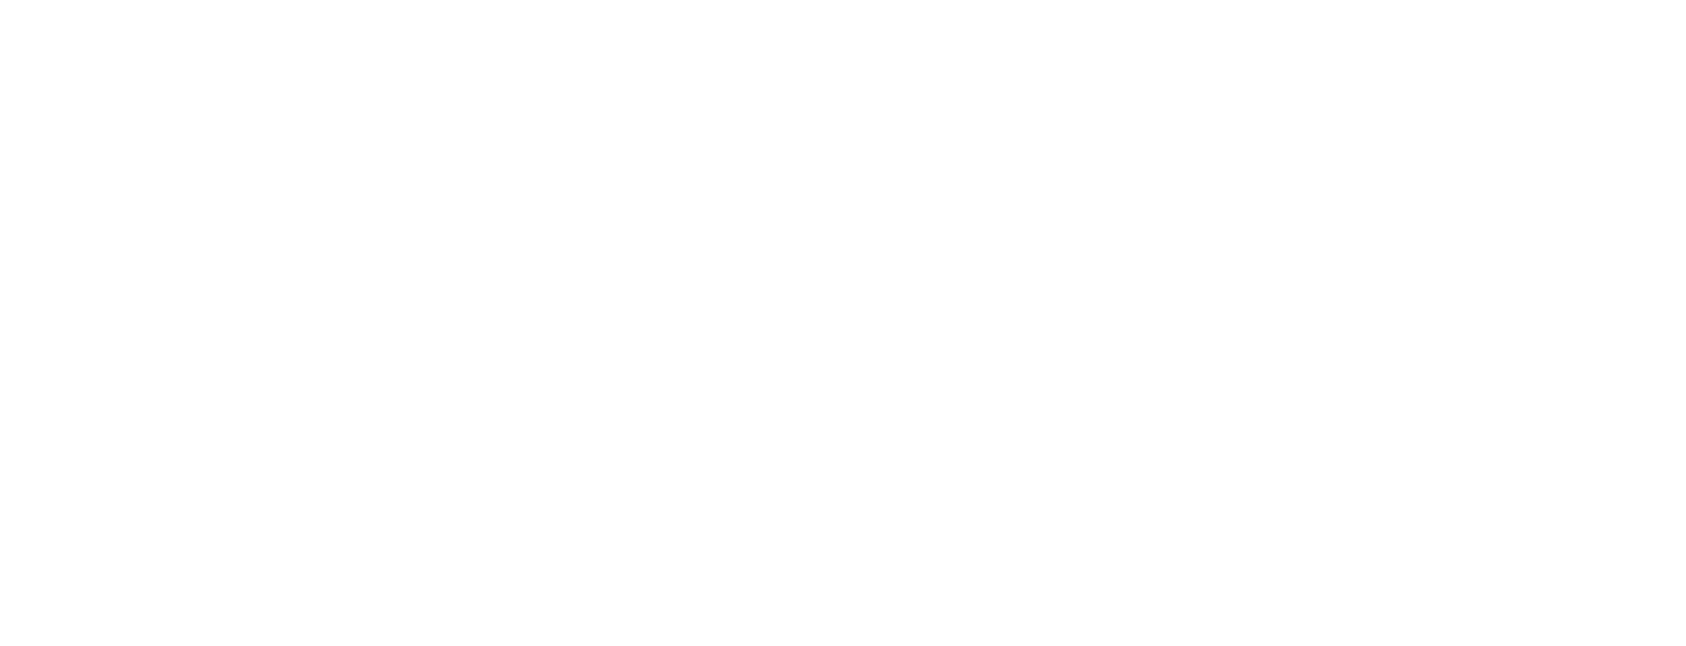 Kaspien logo